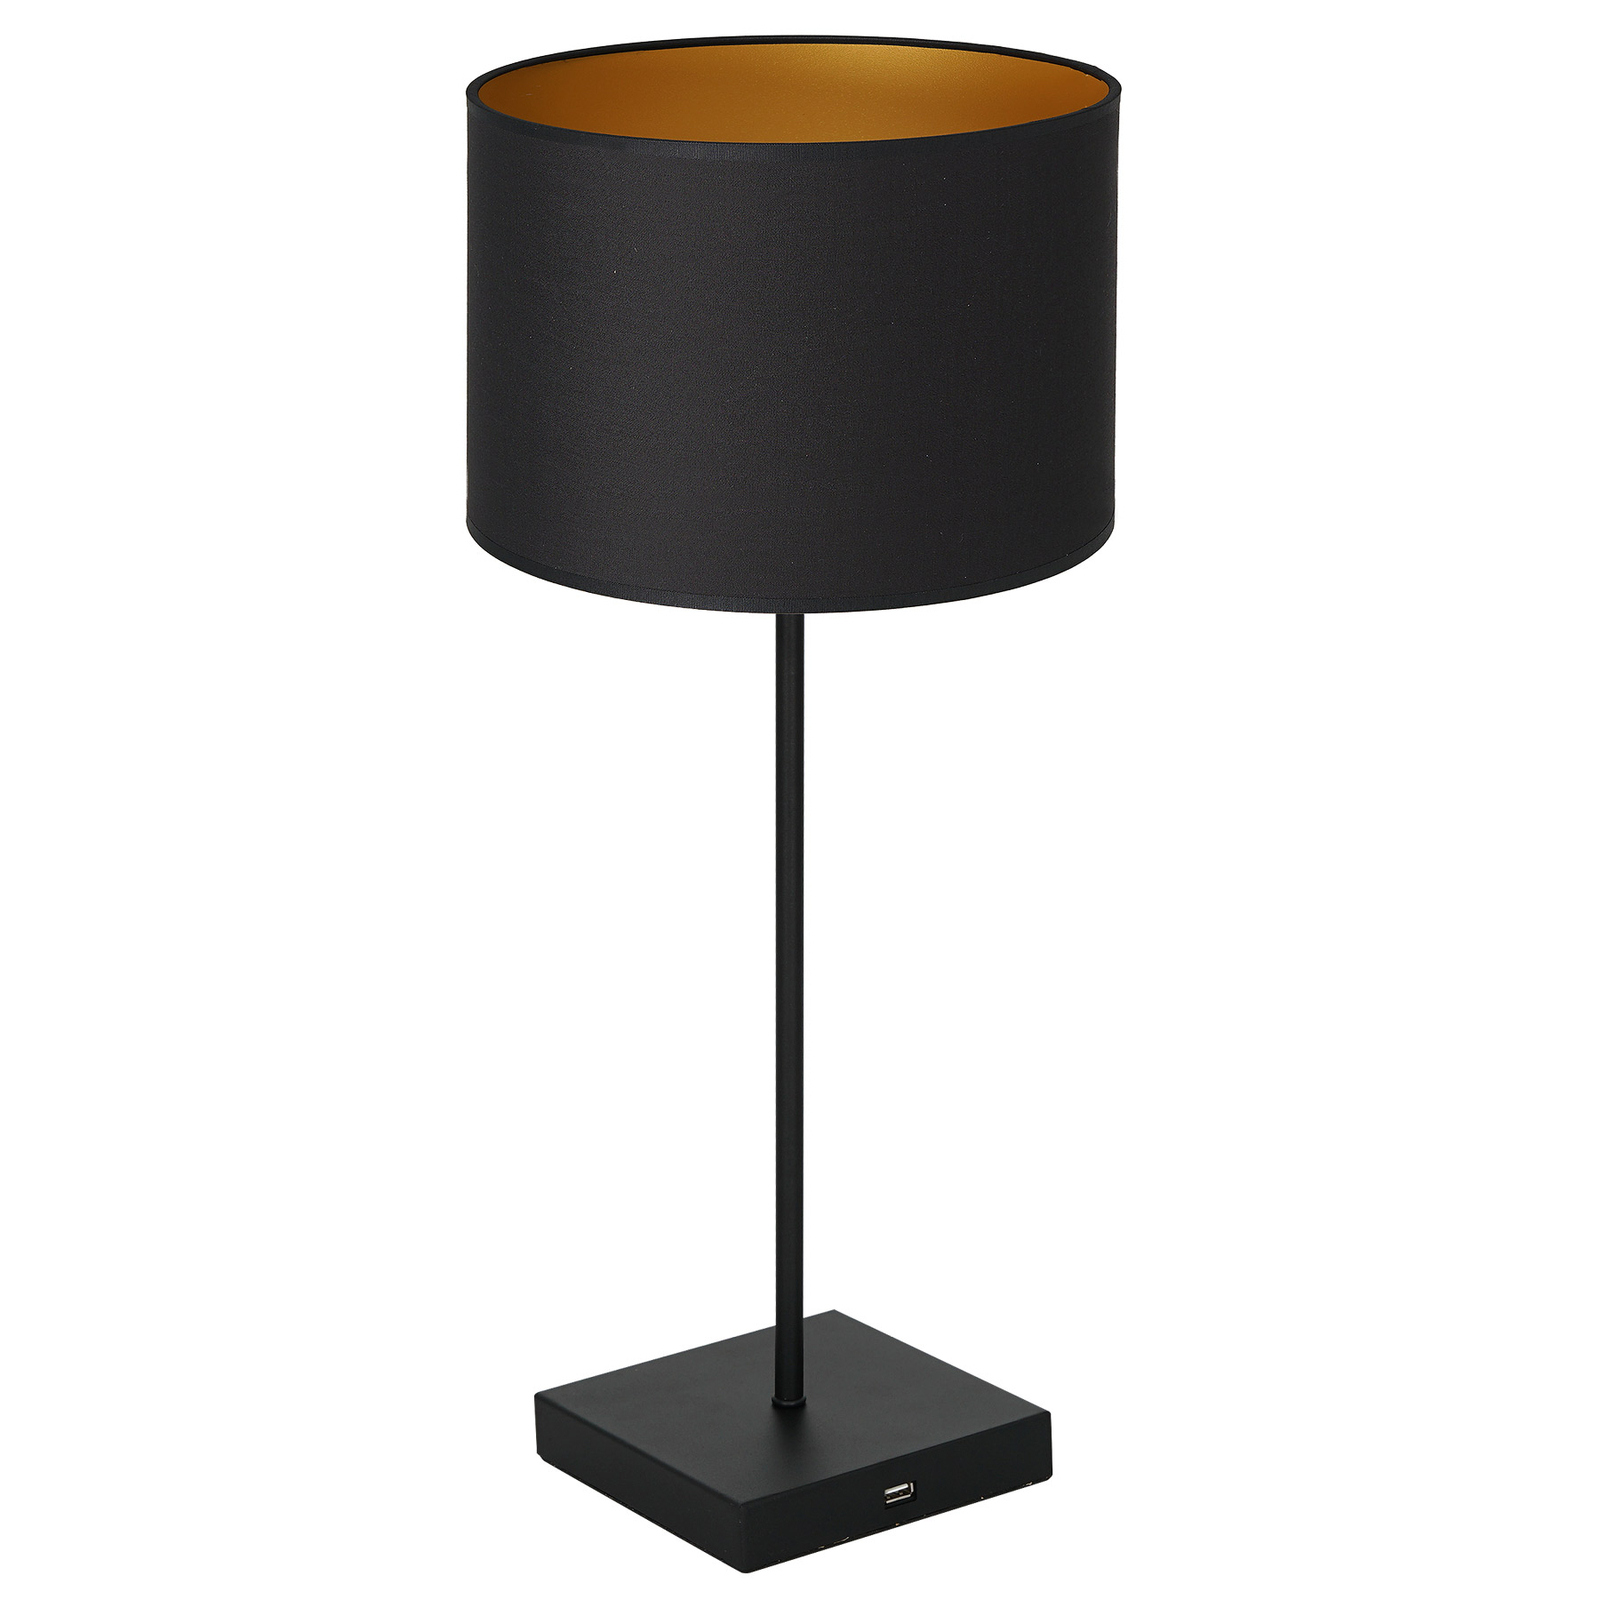 Table-pöytälamppu musta, lieriö musta-kulta